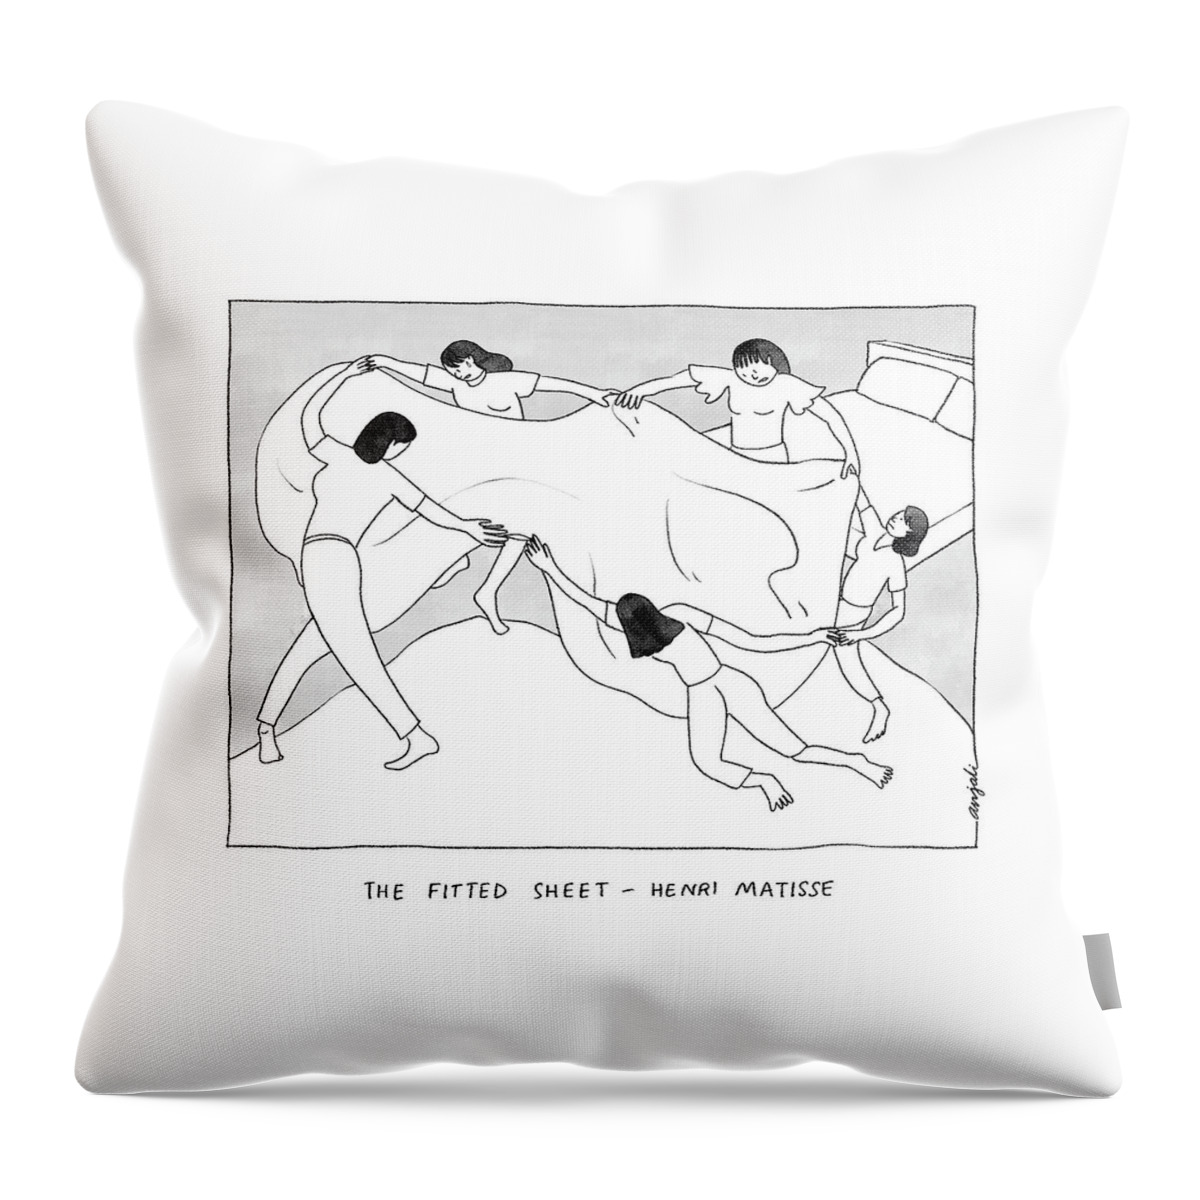 The Fitted Sheet Henri Matisse Throw Pillow